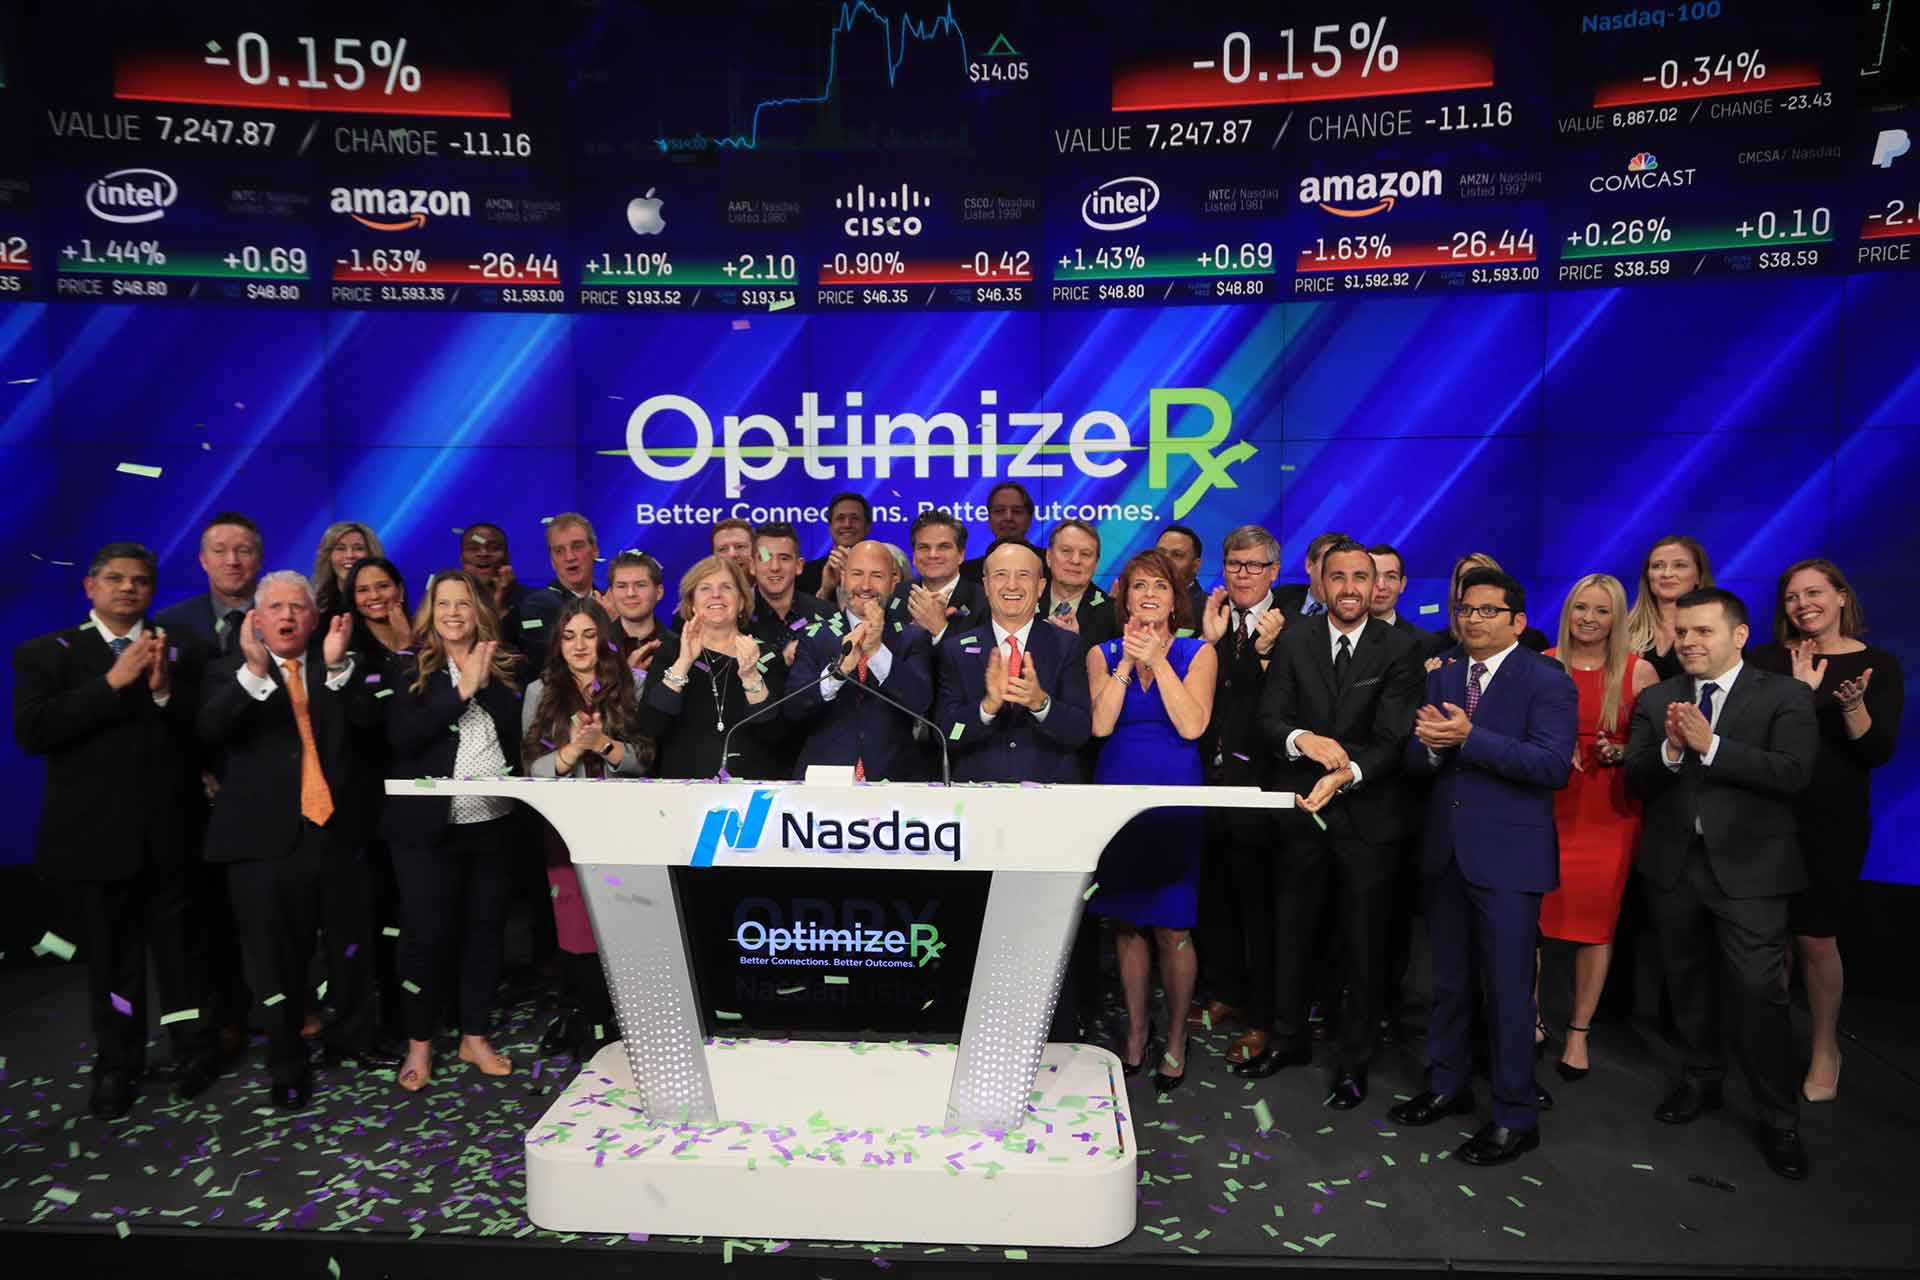 OptimizeRx became public NASDAQ ringing the bell